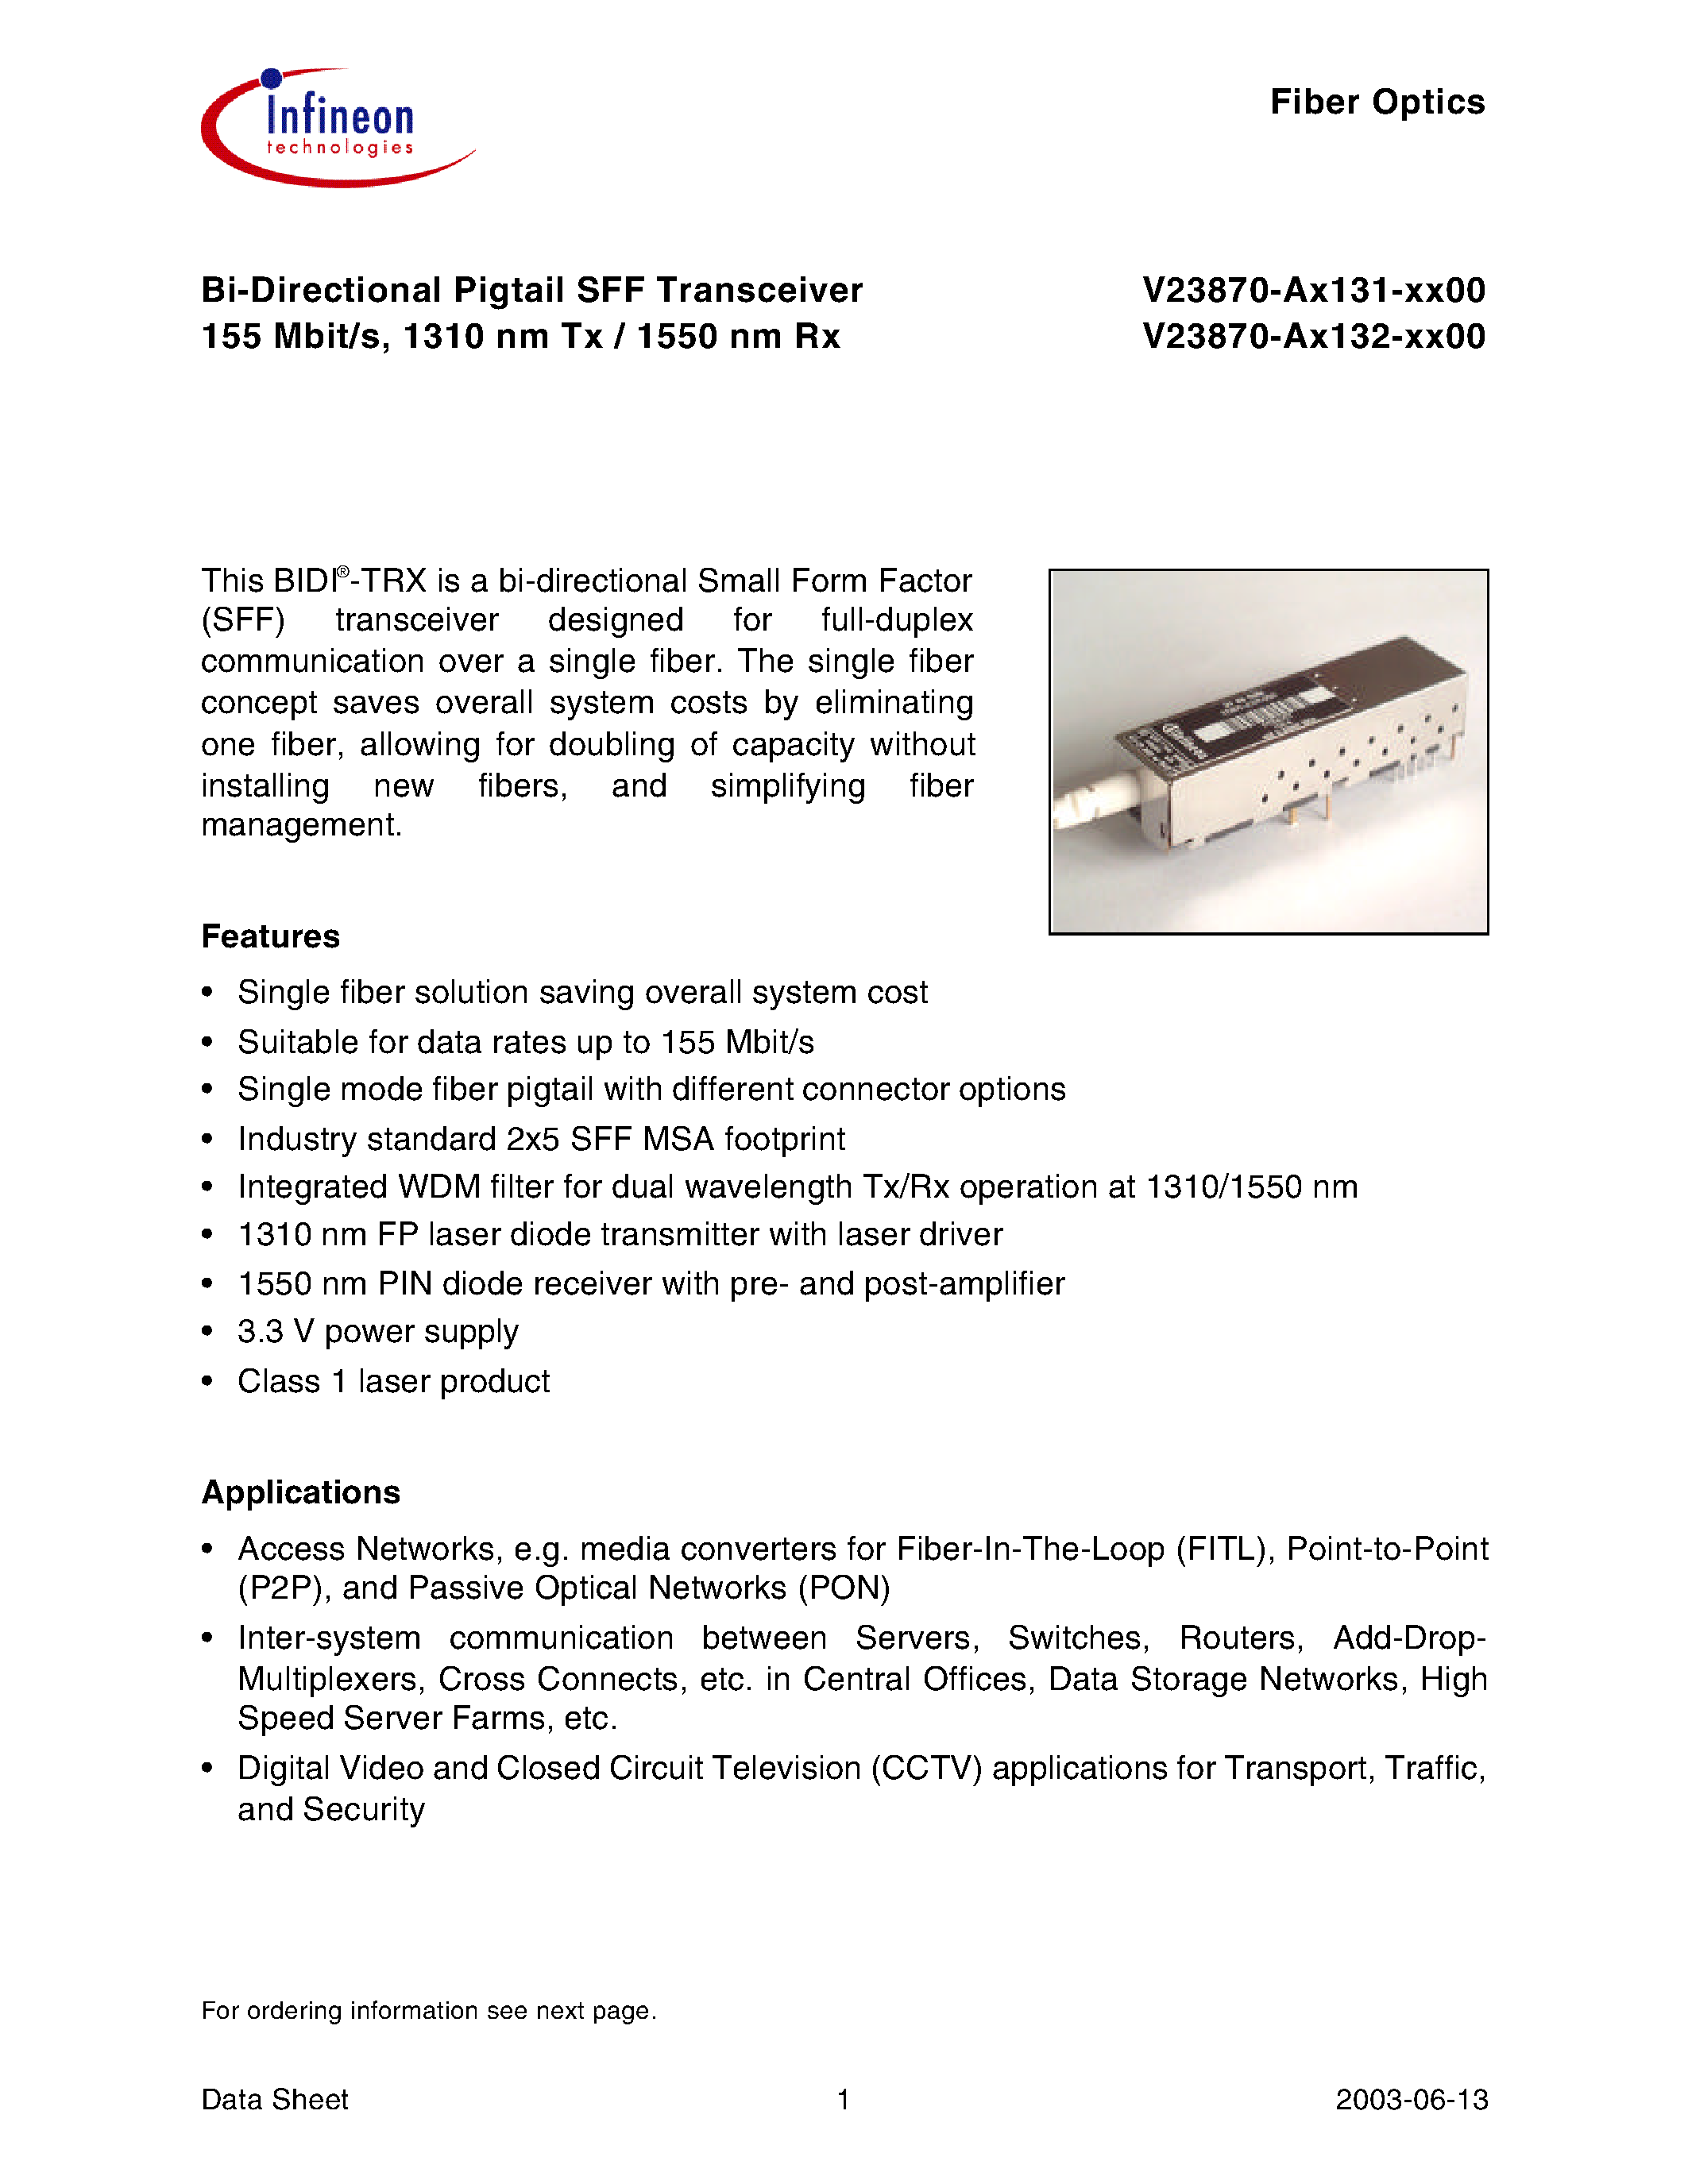 Даташит V23870-A3132-A600 - Bi-Directional Pigtail SFF Transceiver 155 Mbit/s/ 1310 nm Tx / 1550 nm Rx страница 1